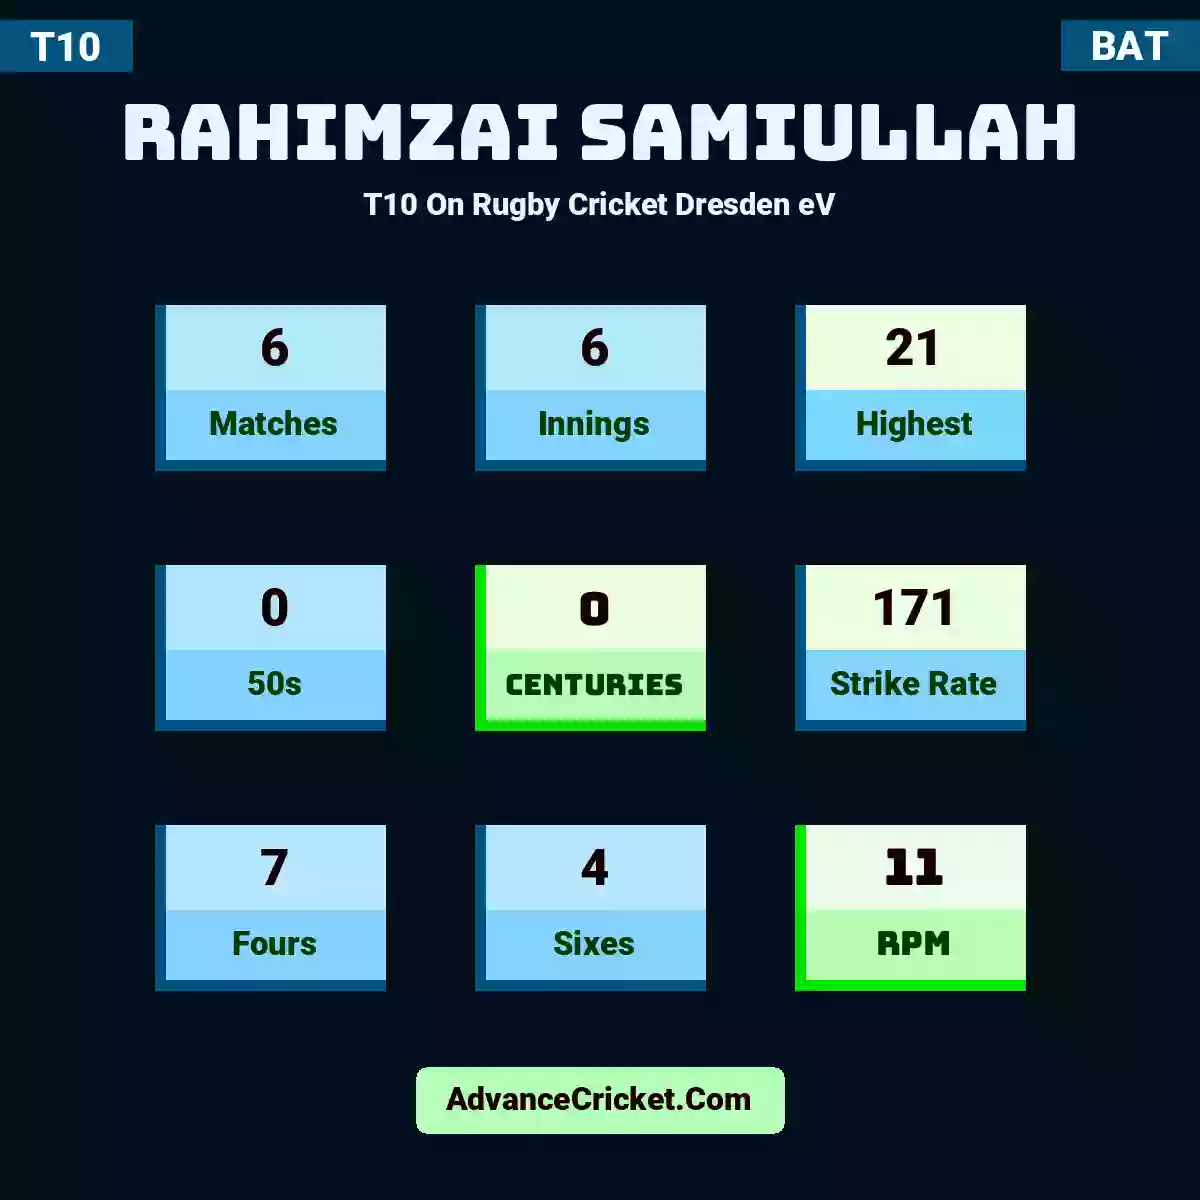 Rahimzai Samiullah T10  On Rugby Cricket Dresden eV, Rahimzai Samiullah played 6 matches, scored 21 runs as highest, 0 half-centuries, and 0 centuries, with a strike rate of 171. R.Samiullah hit 7 fours and 4 sixes, with an RPM of 11.